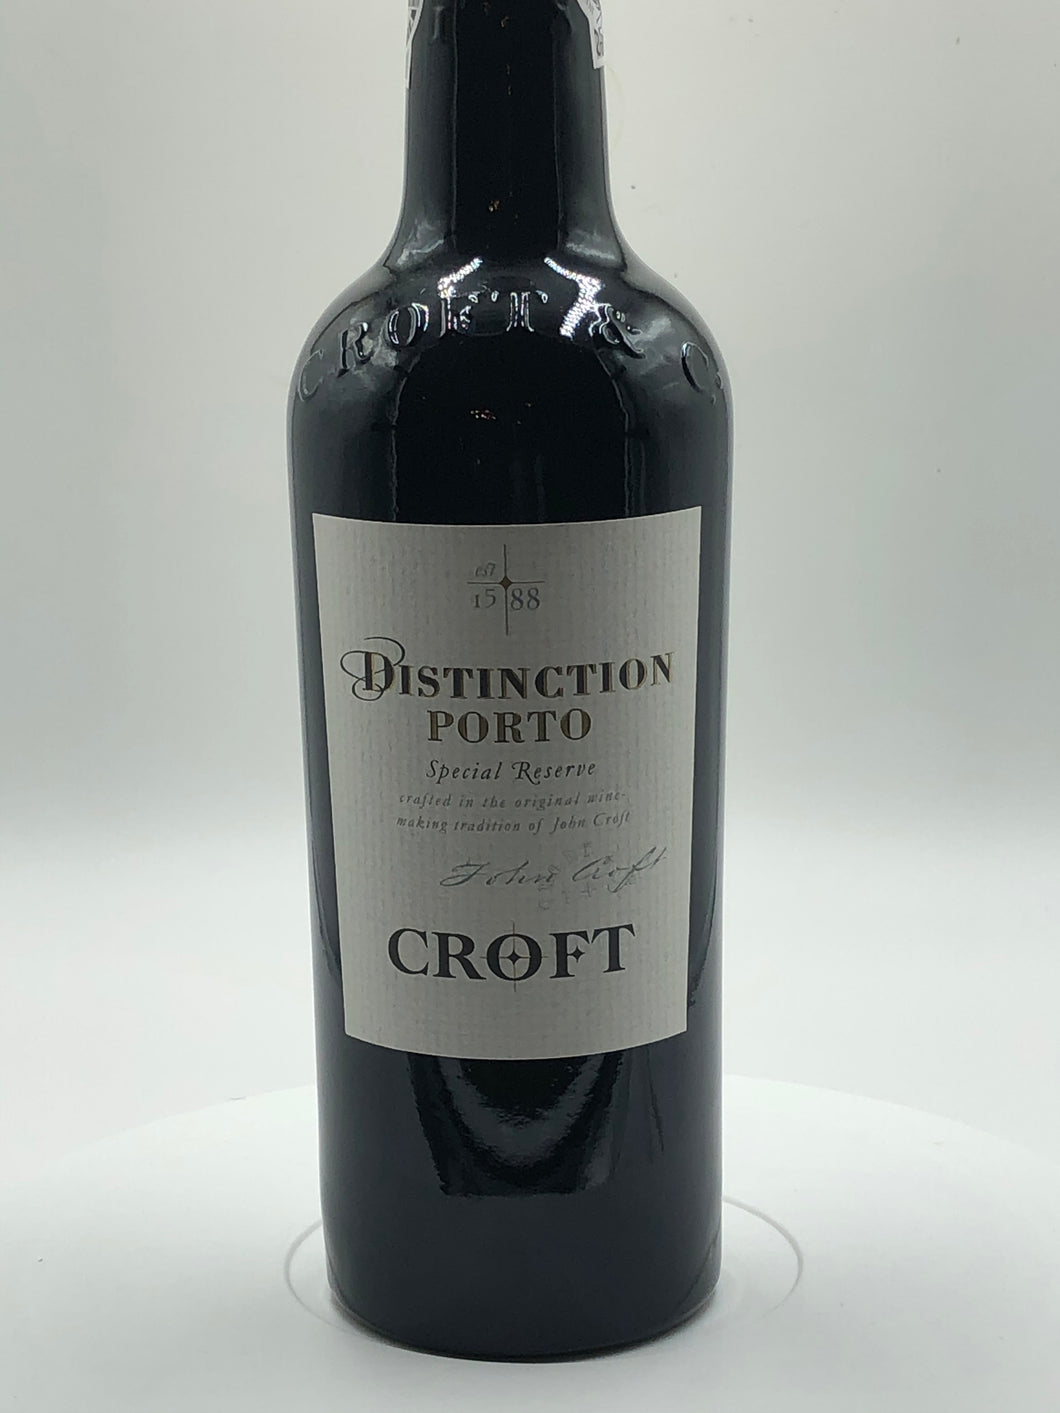 Croft “Distinction” port